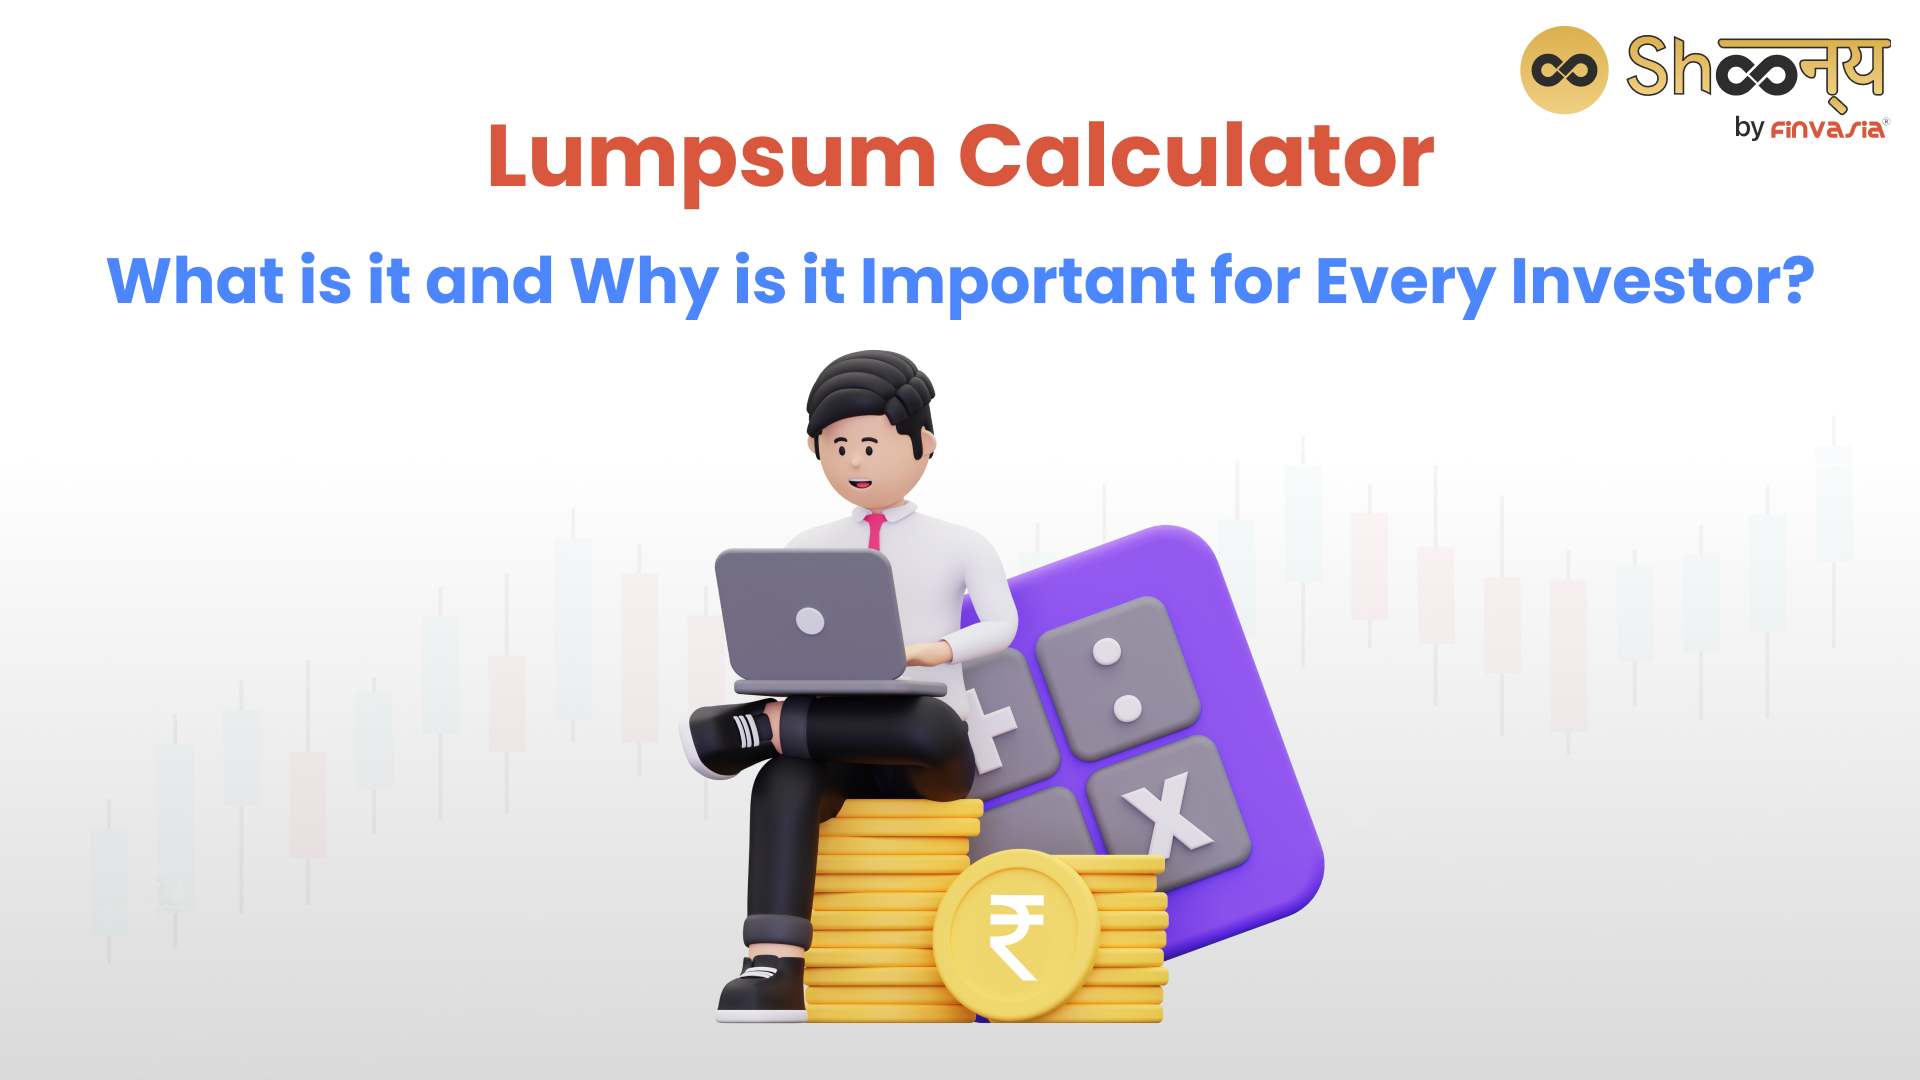 What are the Benefits of Lumpsum Calculator?